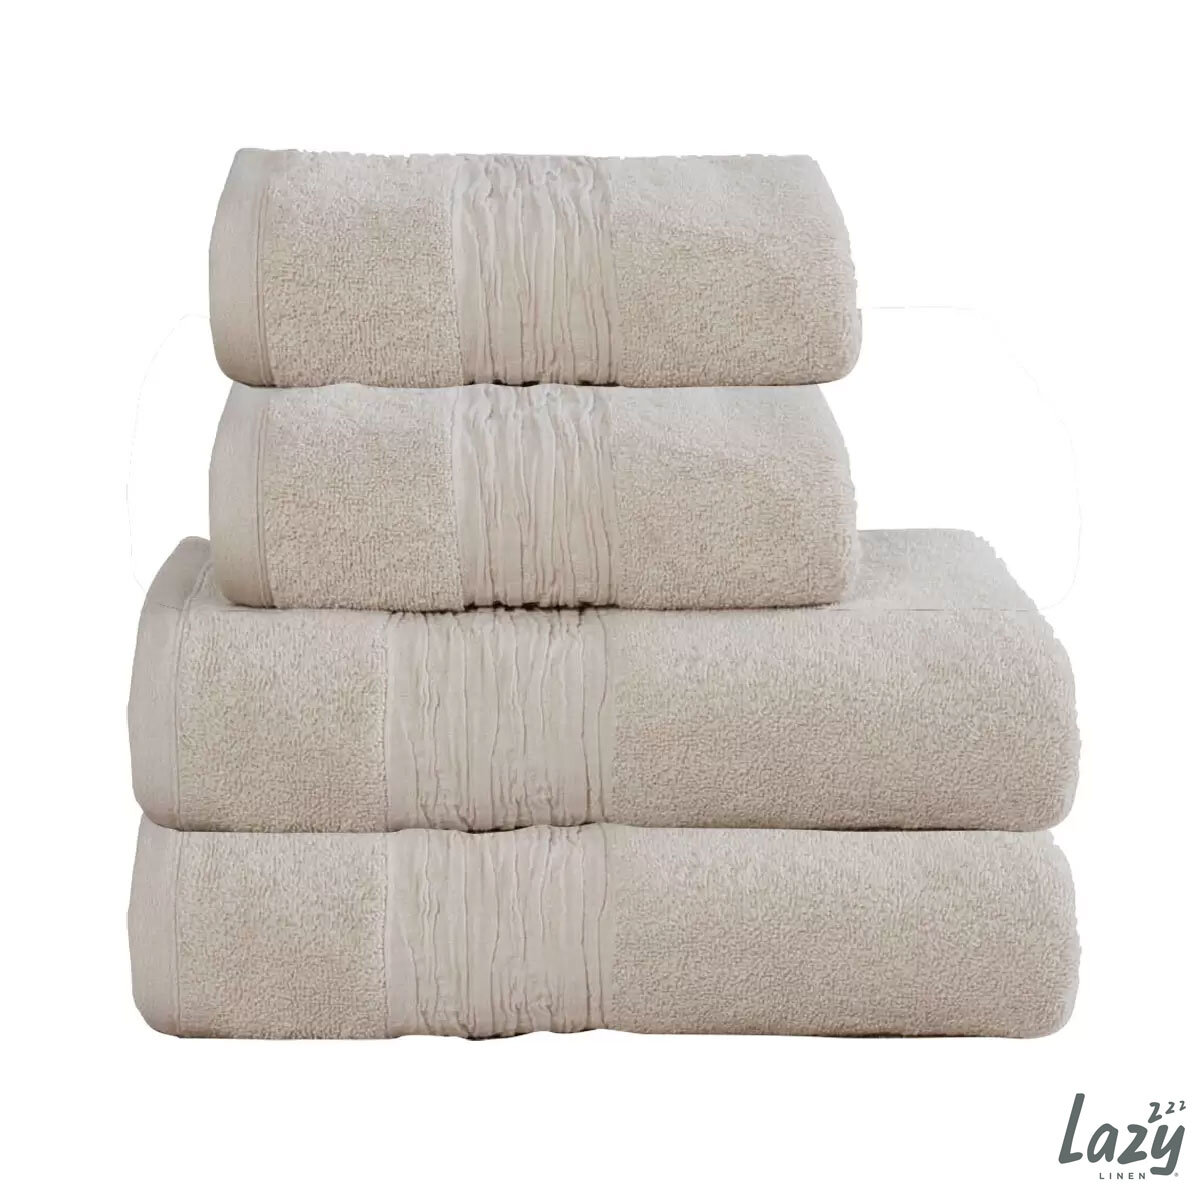 Lazy Linen 4 Piece Hand & Bath Sheet Towel Bundle in Linen, 2 x Hand Towels & 2 x Bath Sheets